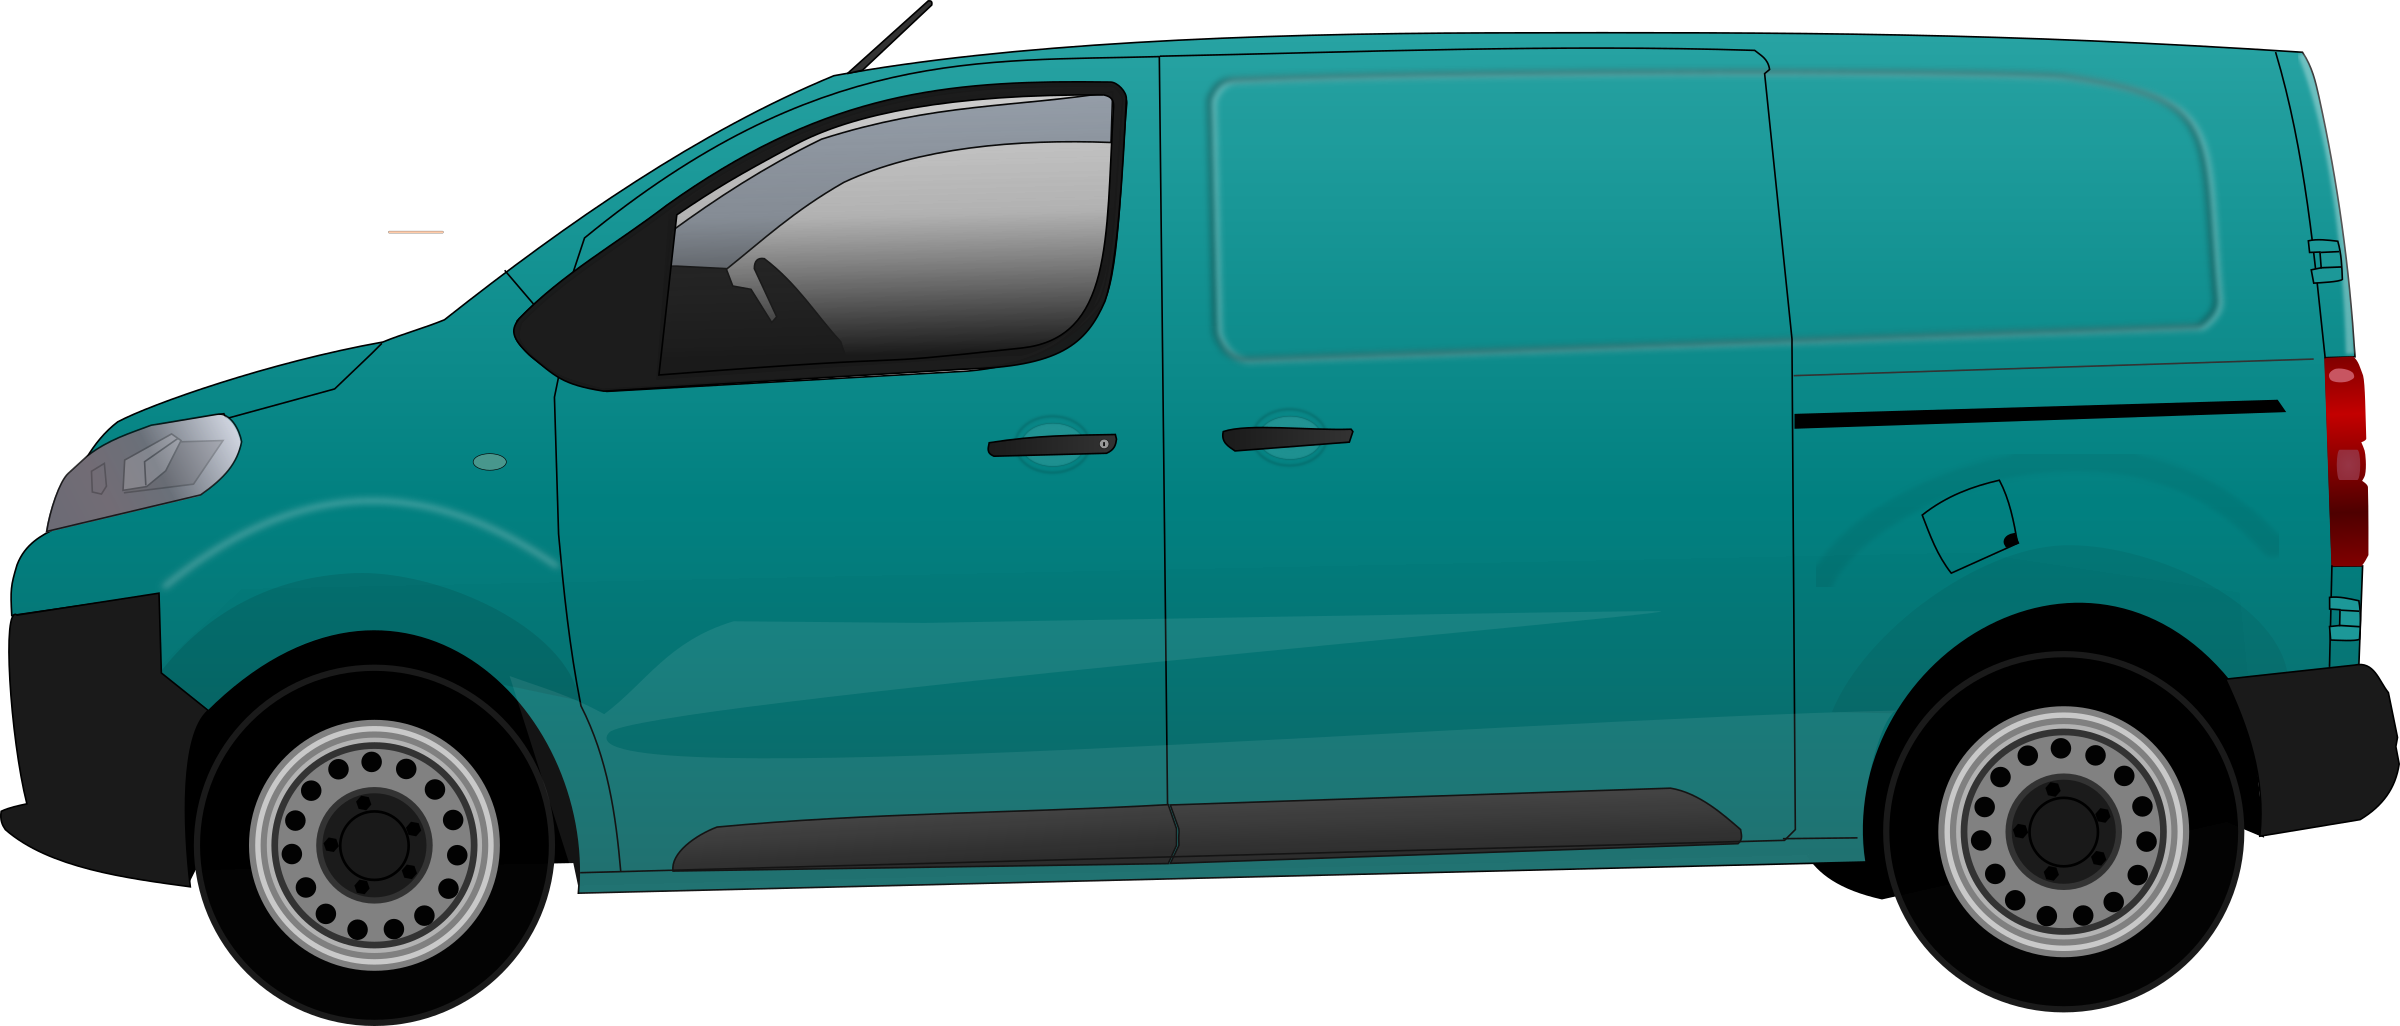 Big Image - Minivan (2400x1026)